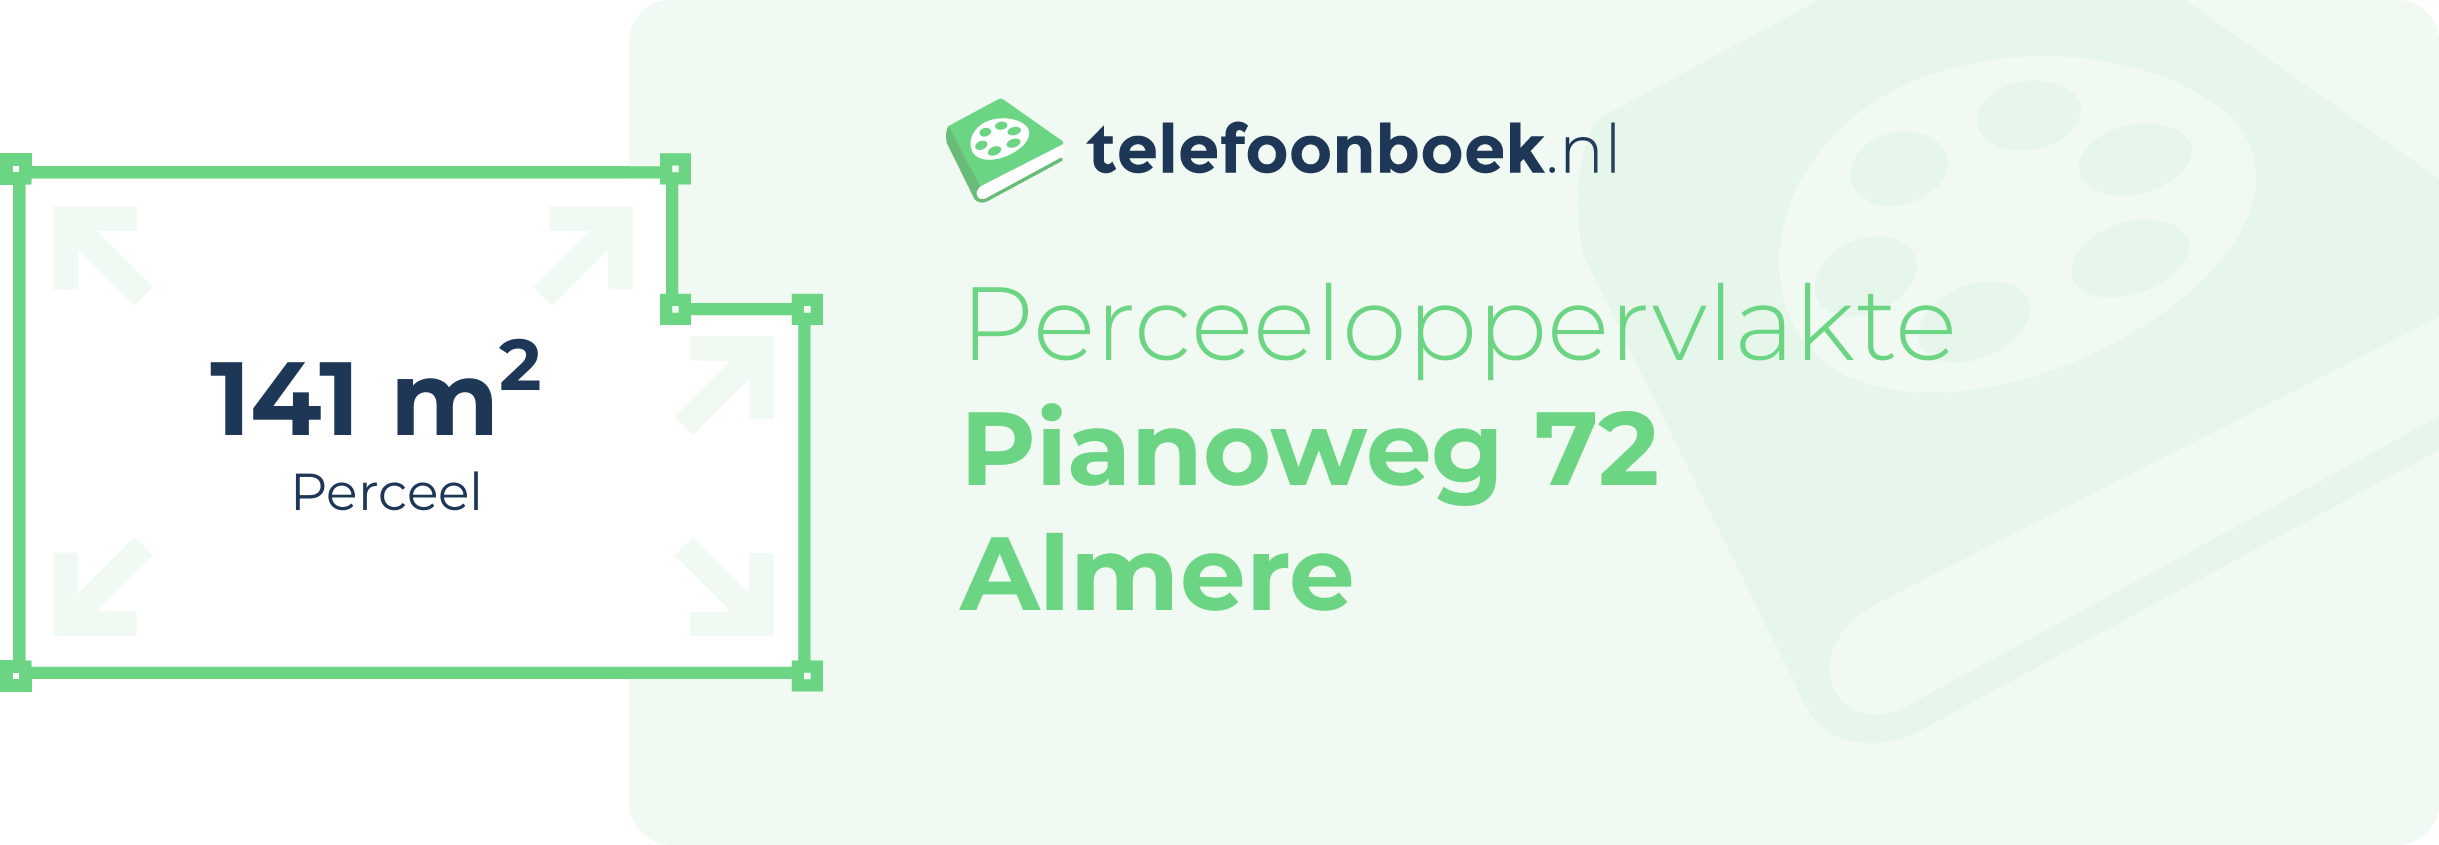 Perceeloppervlakte Pianoweg 72 Almere